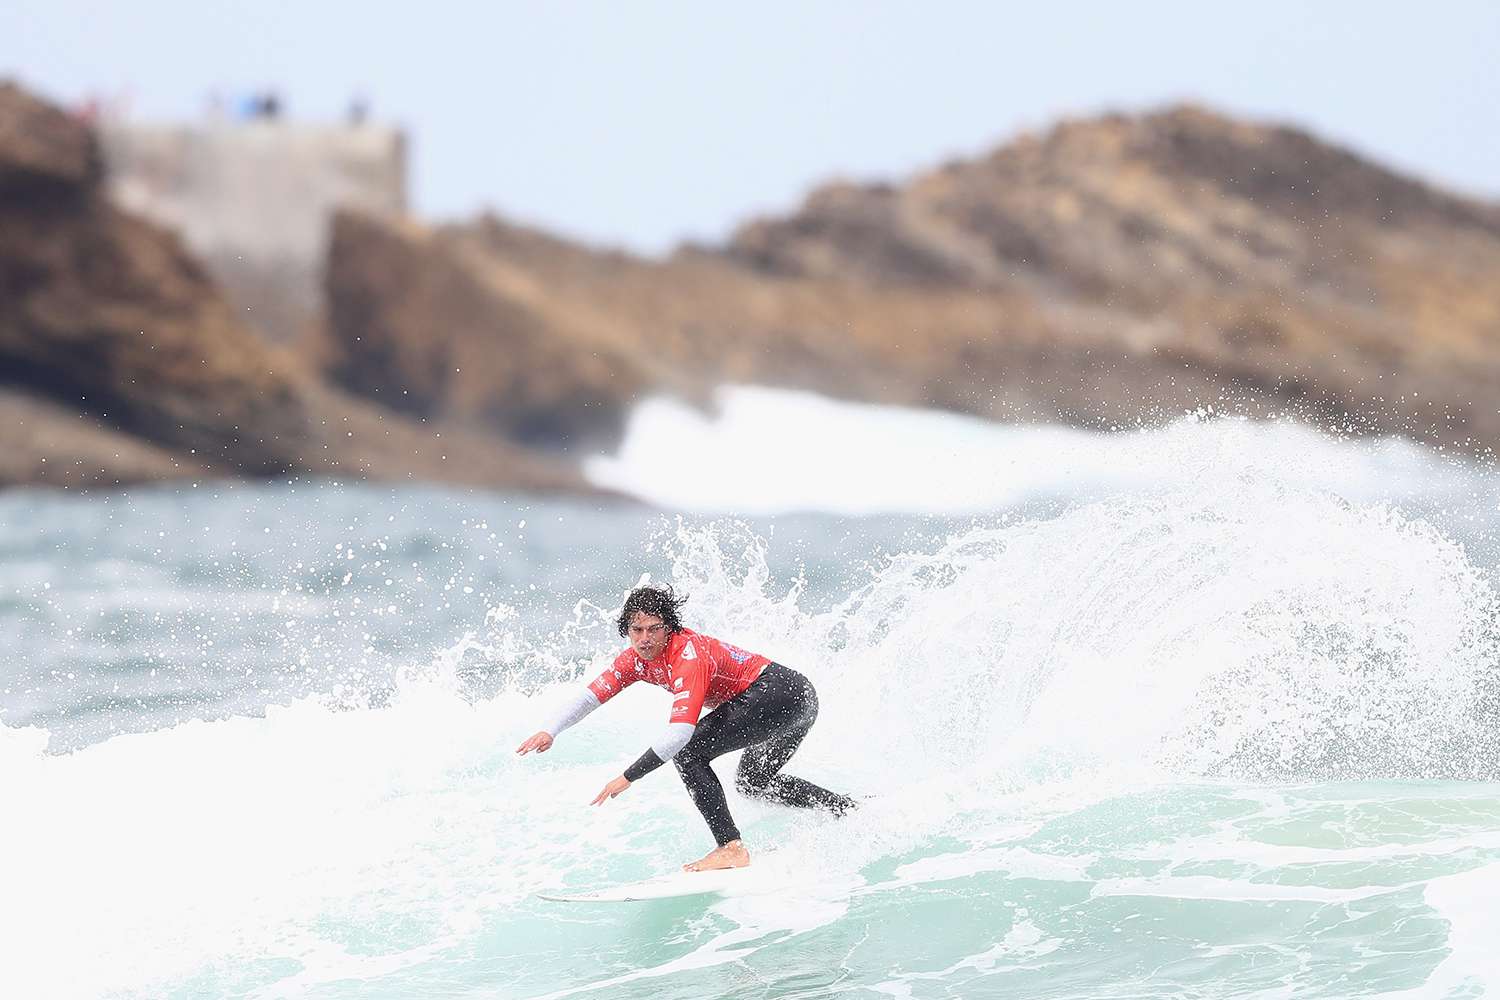 Surfing World Mourns The Loss Of Ecuadorian Champion Israel Barona